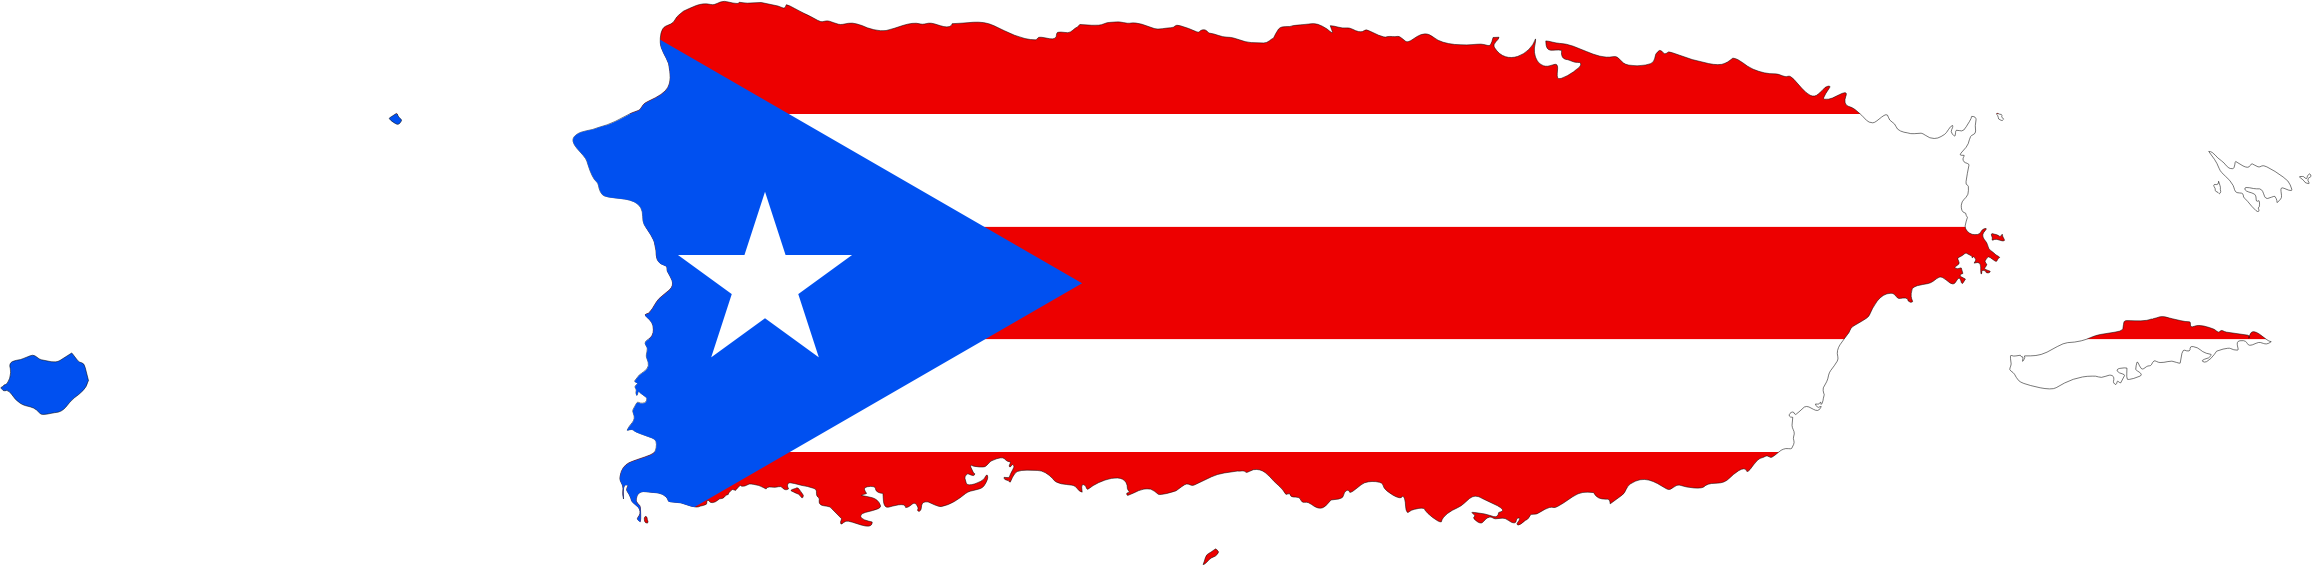 Big Image (Png) - Puerto Rico, Transparent background PNG HD thumbnail